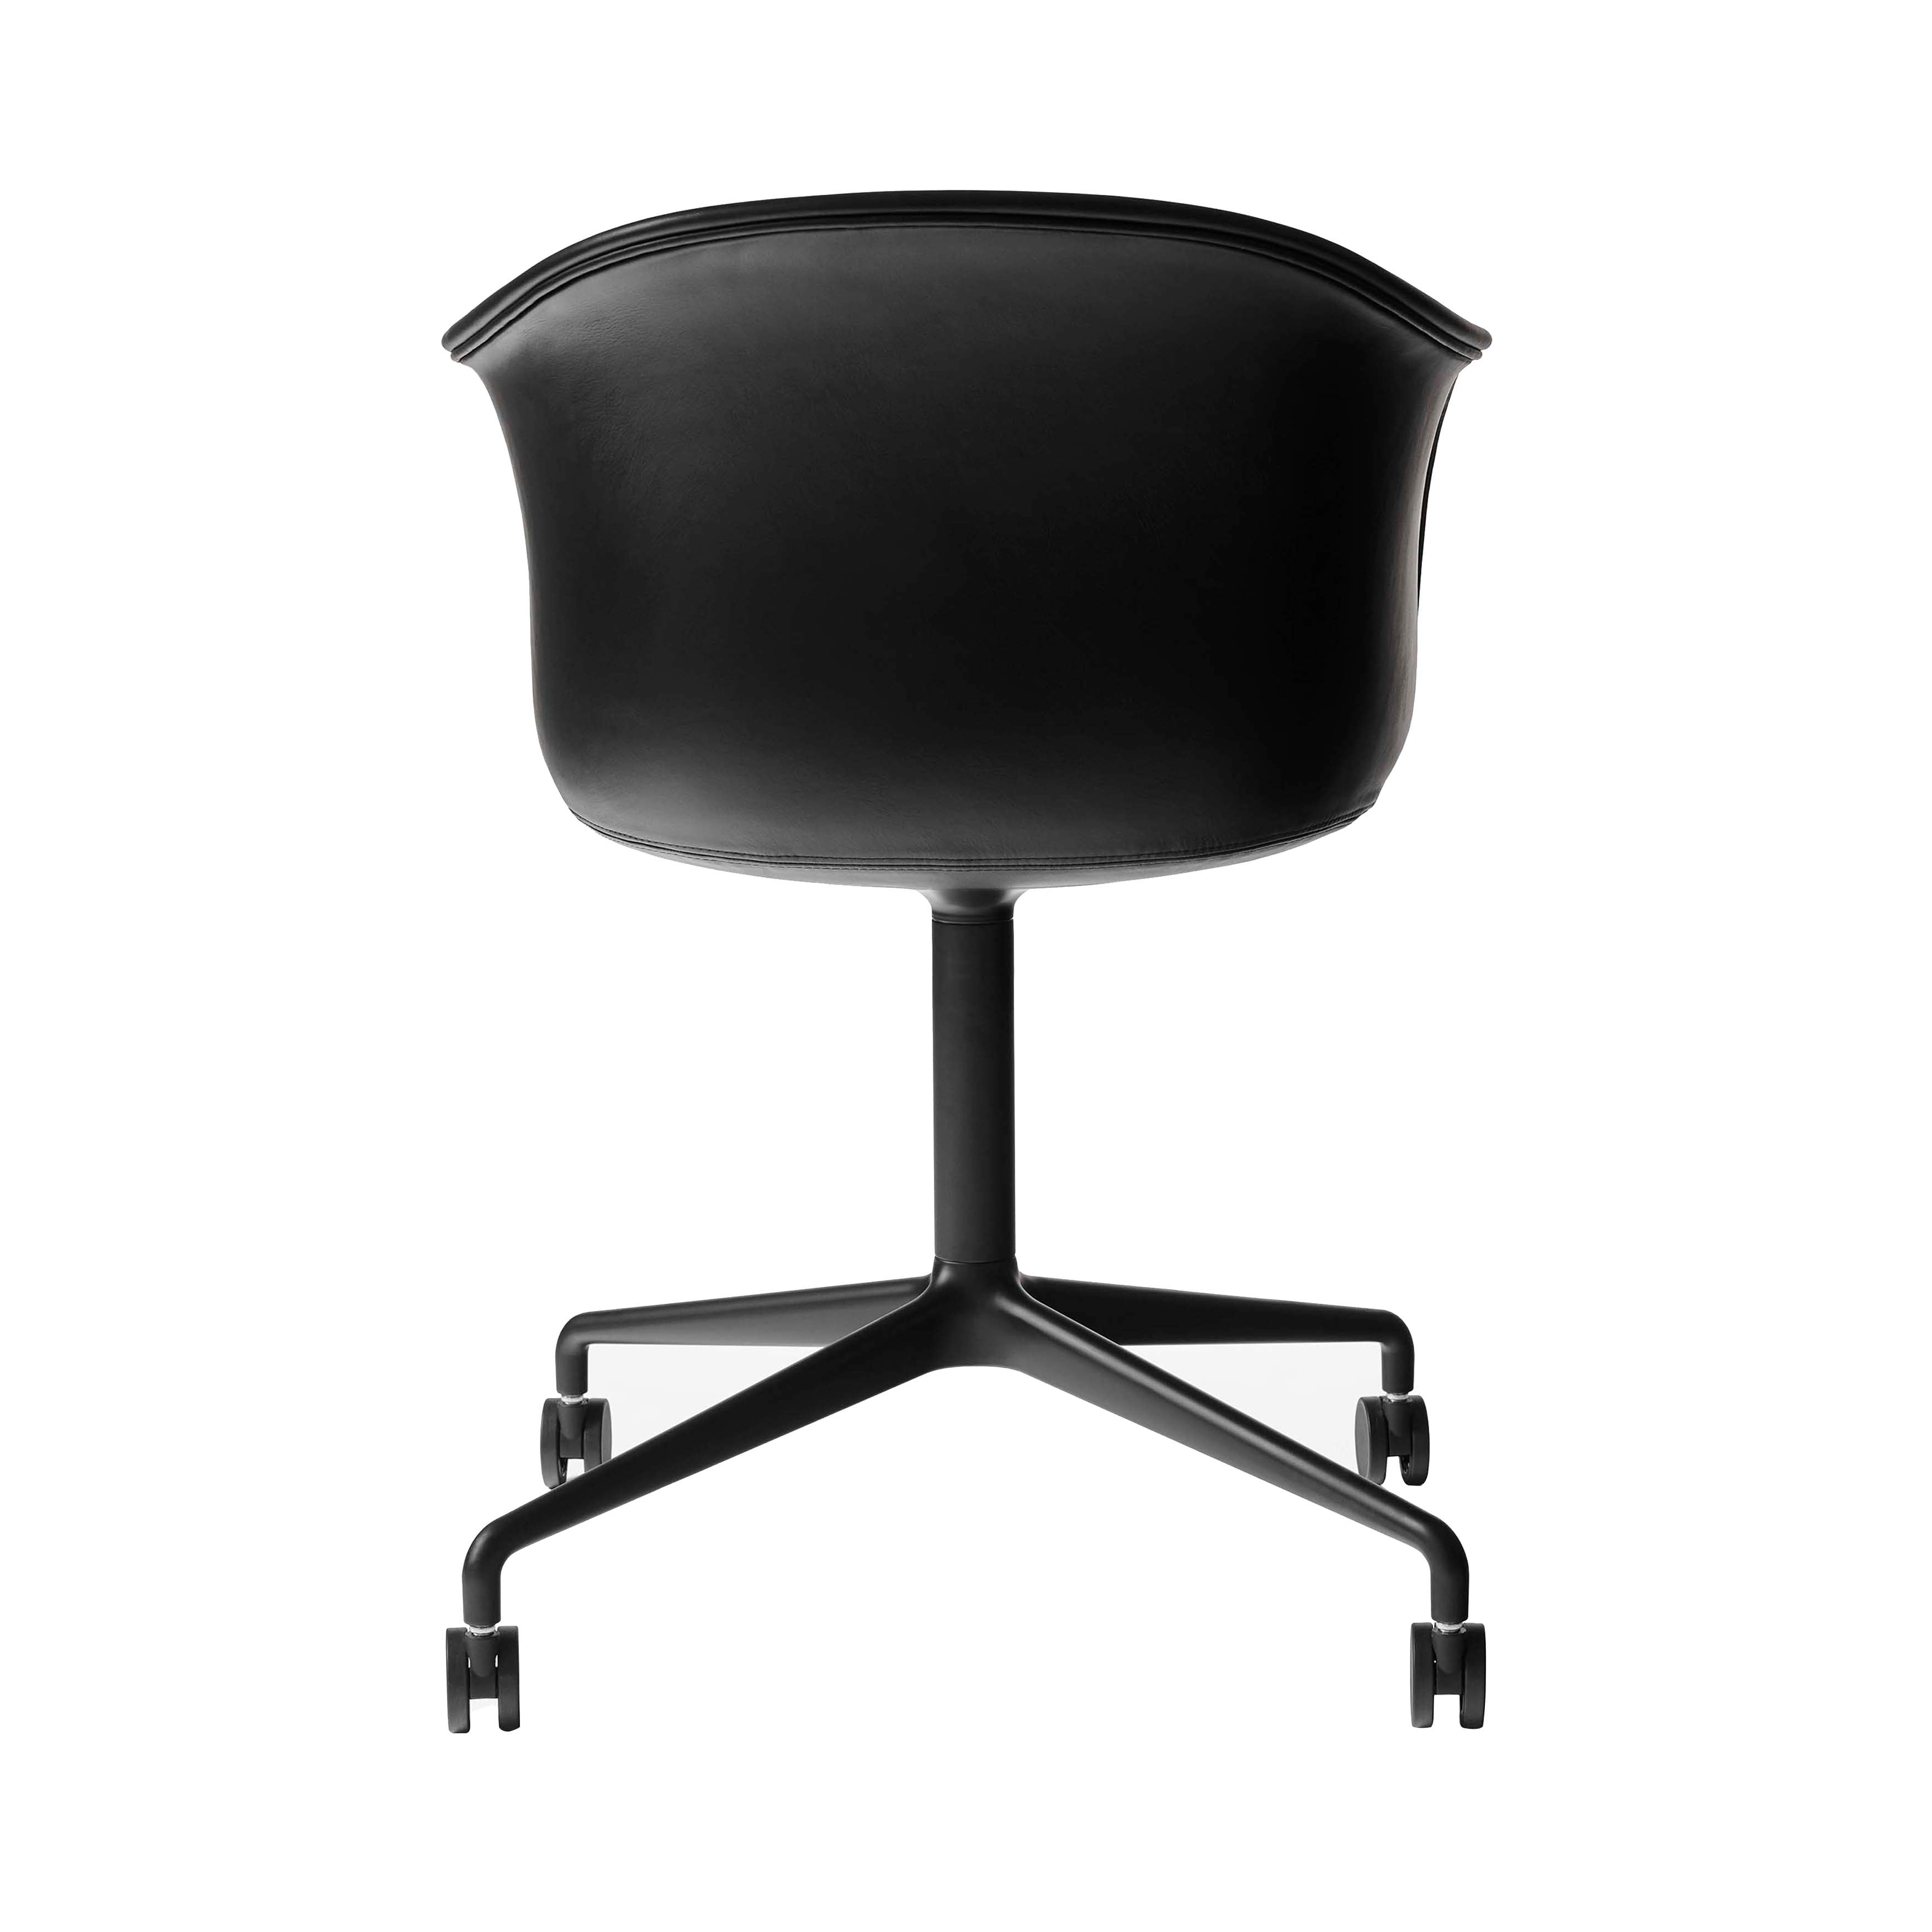 Elefy Chair JH37: Swivel Base + Castors + Black